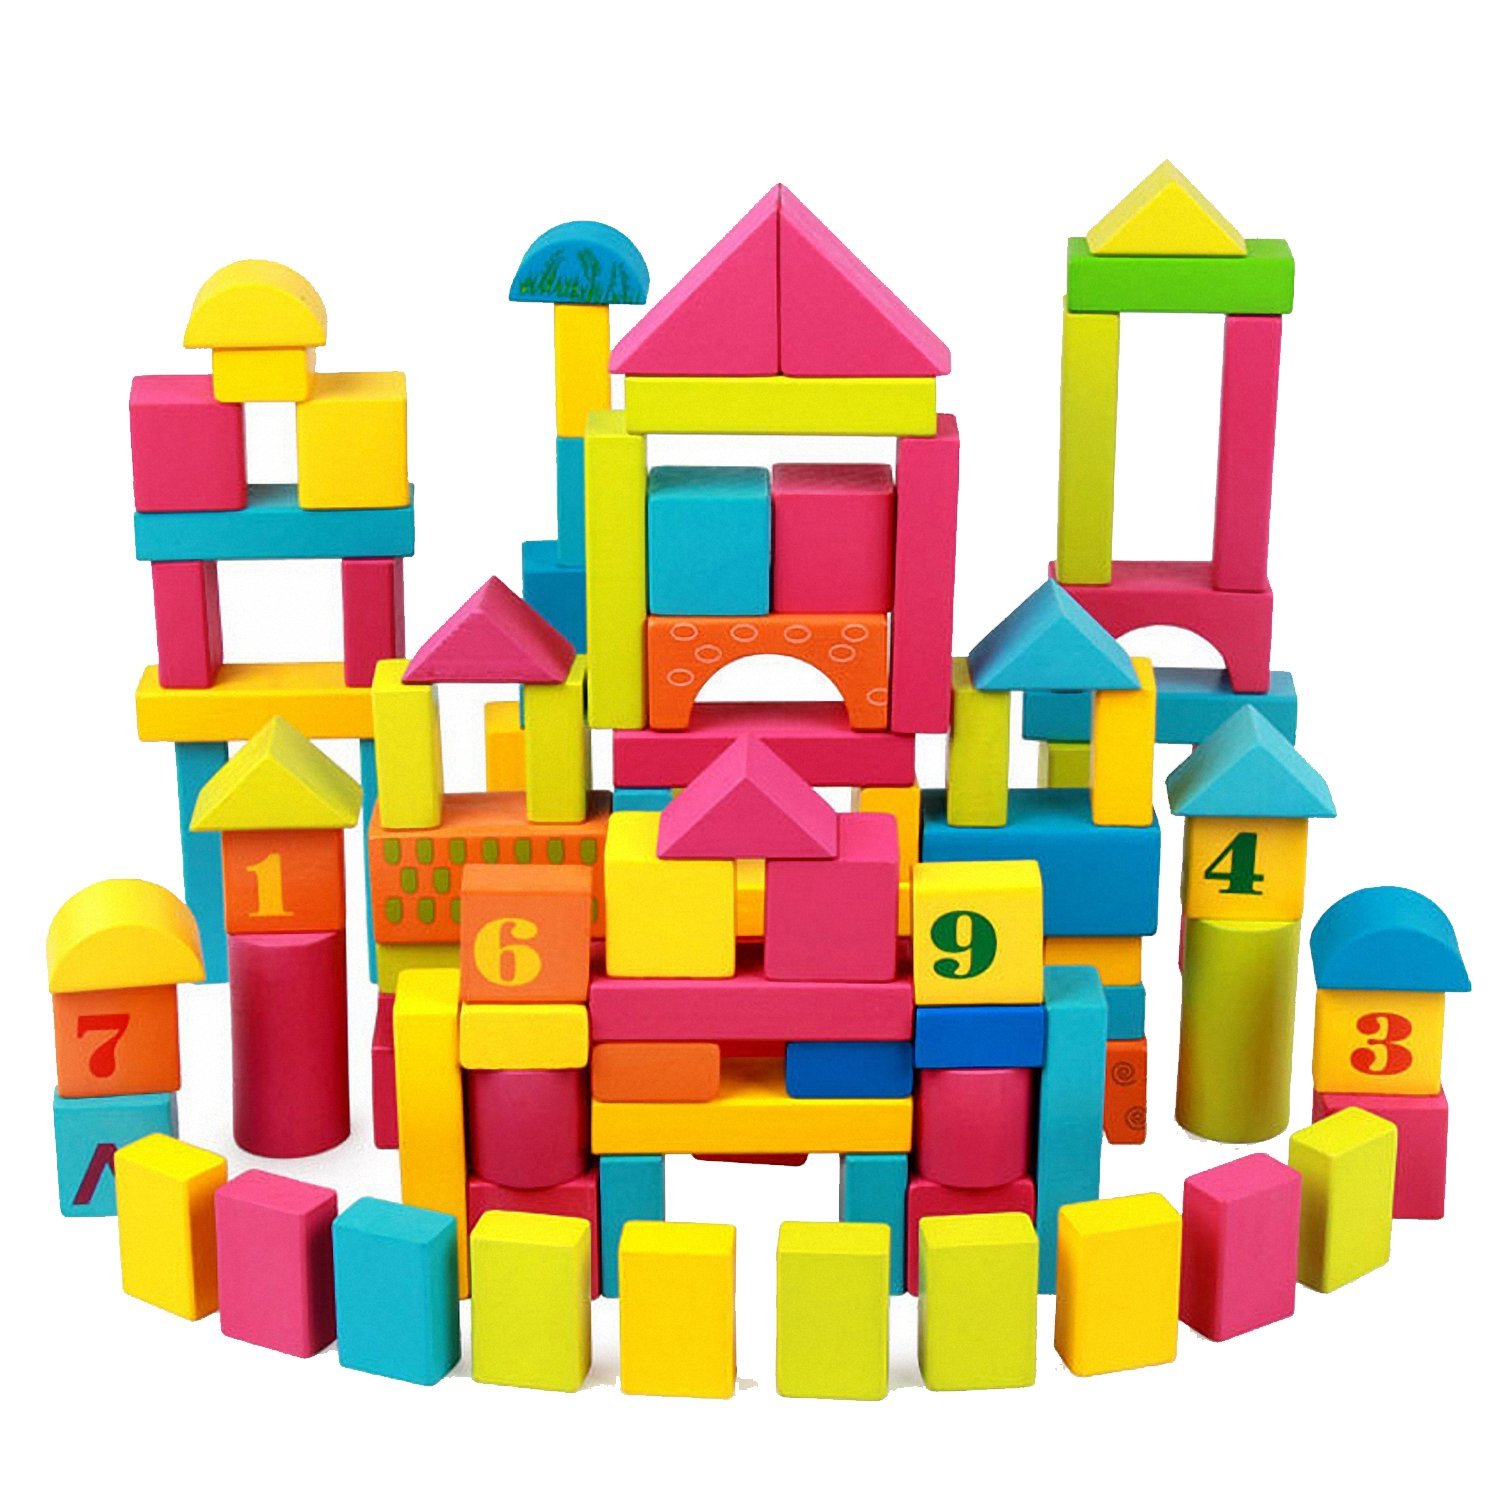 Buy Baztoy Wooden Number Building Blocks Toys,